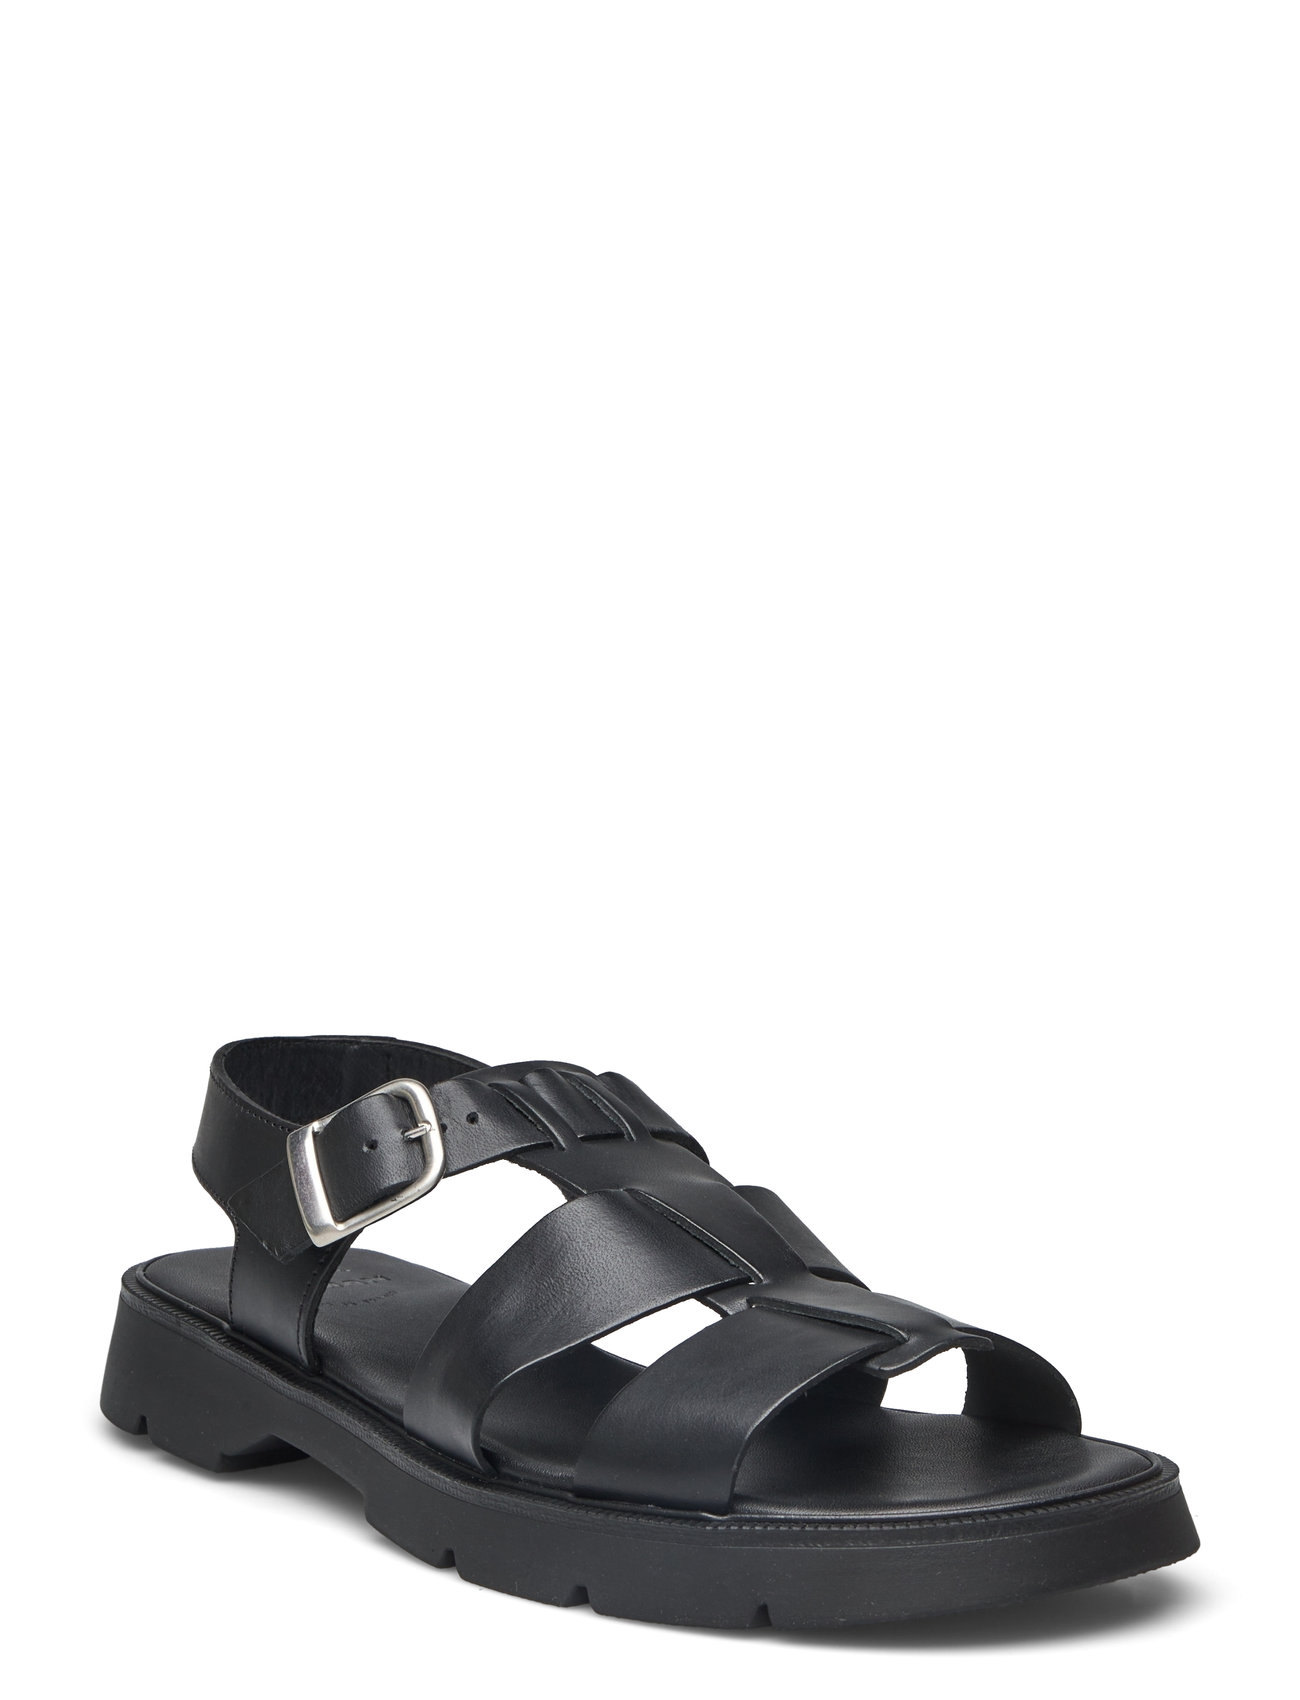 Ballast Vgt Designers Summer Shoes Sandals Black KLEMAN